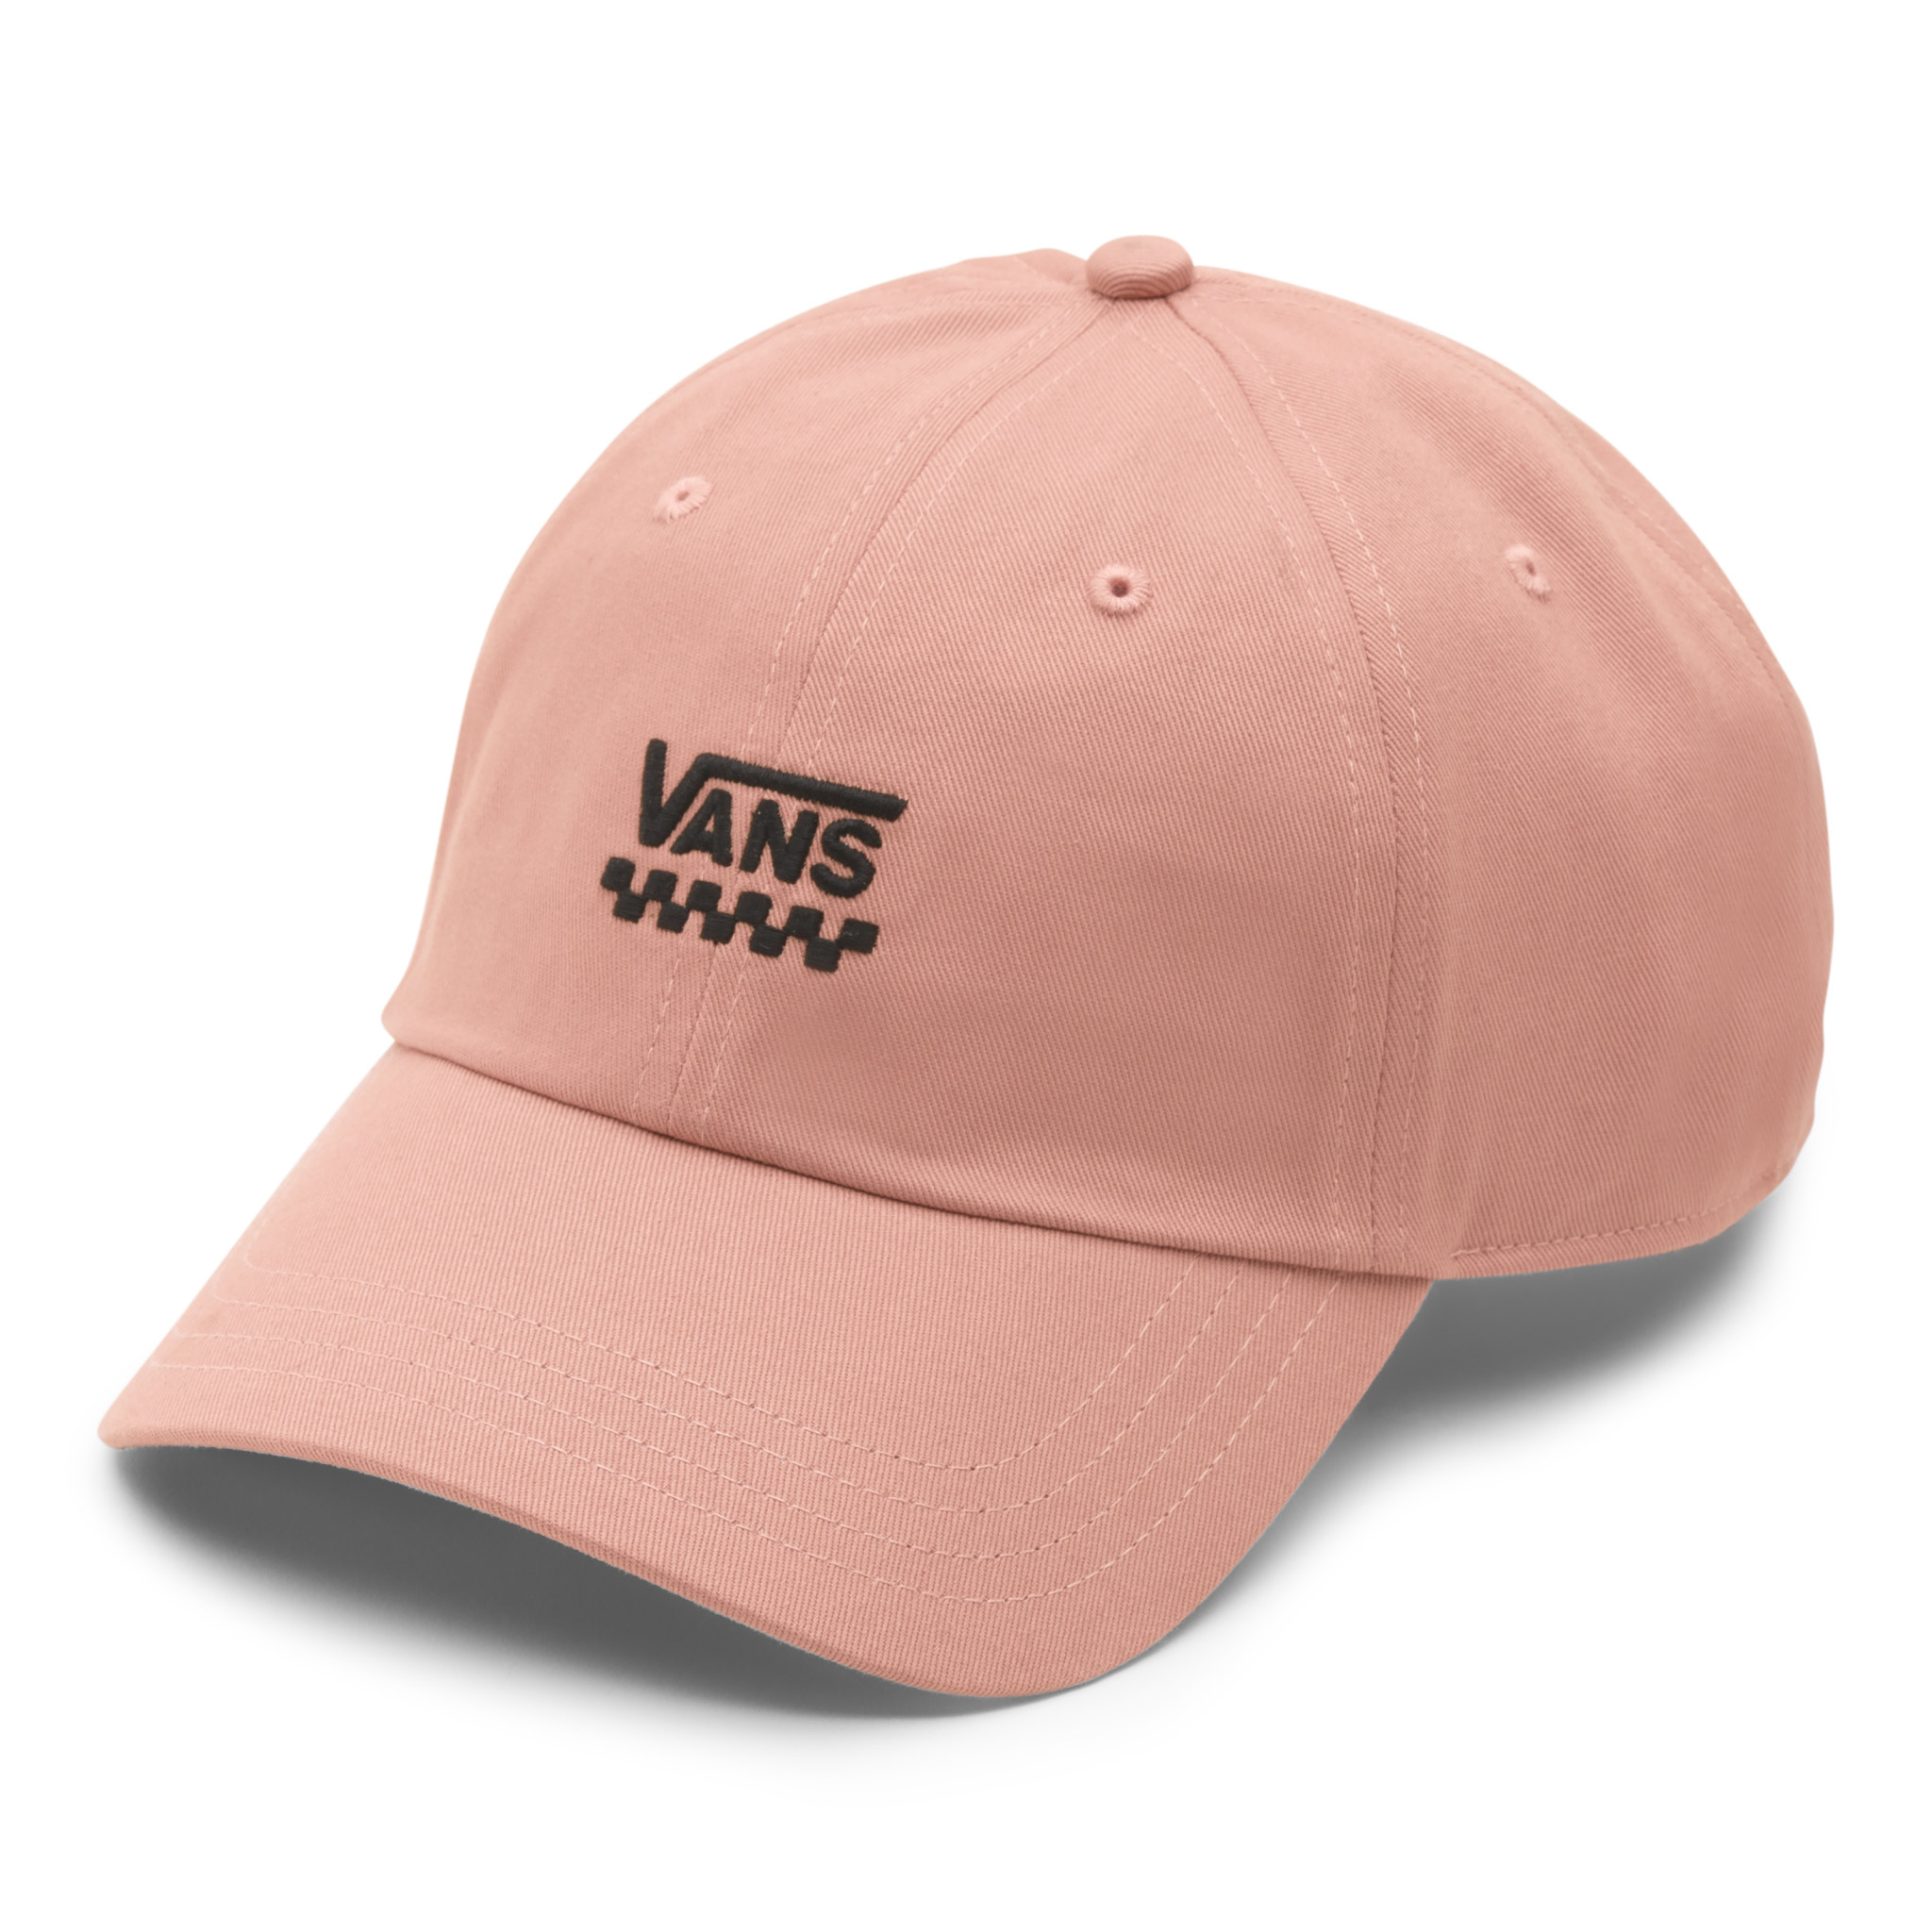 vans courtside hat